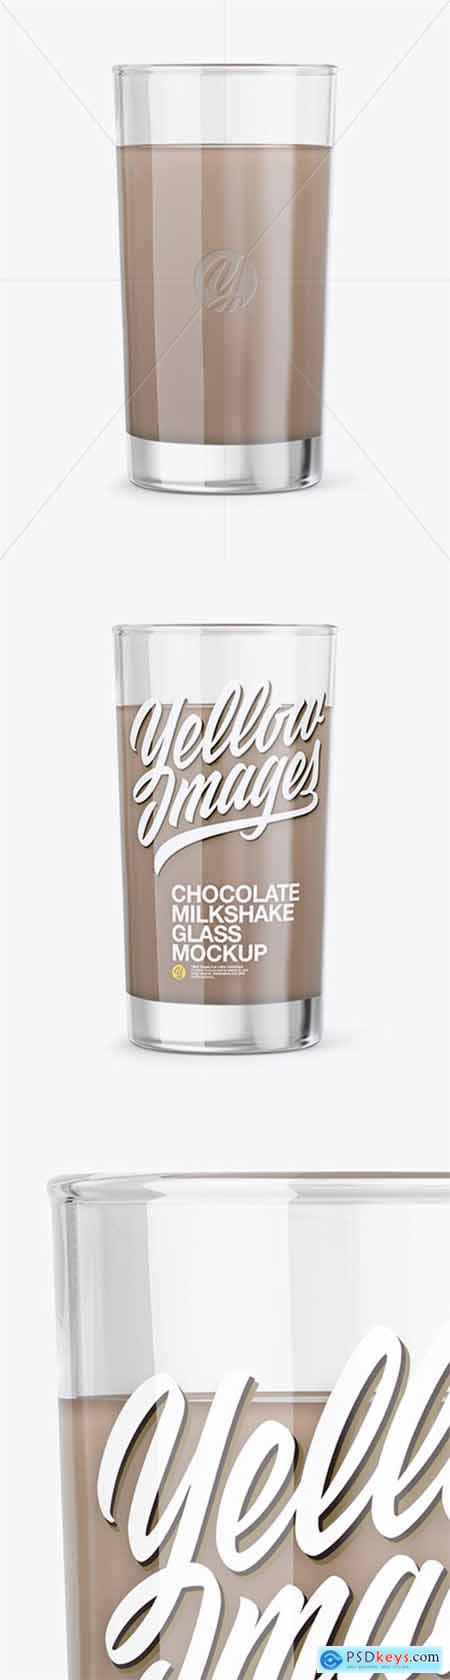 Glass With Chocolate Milkshake Mockup 24768